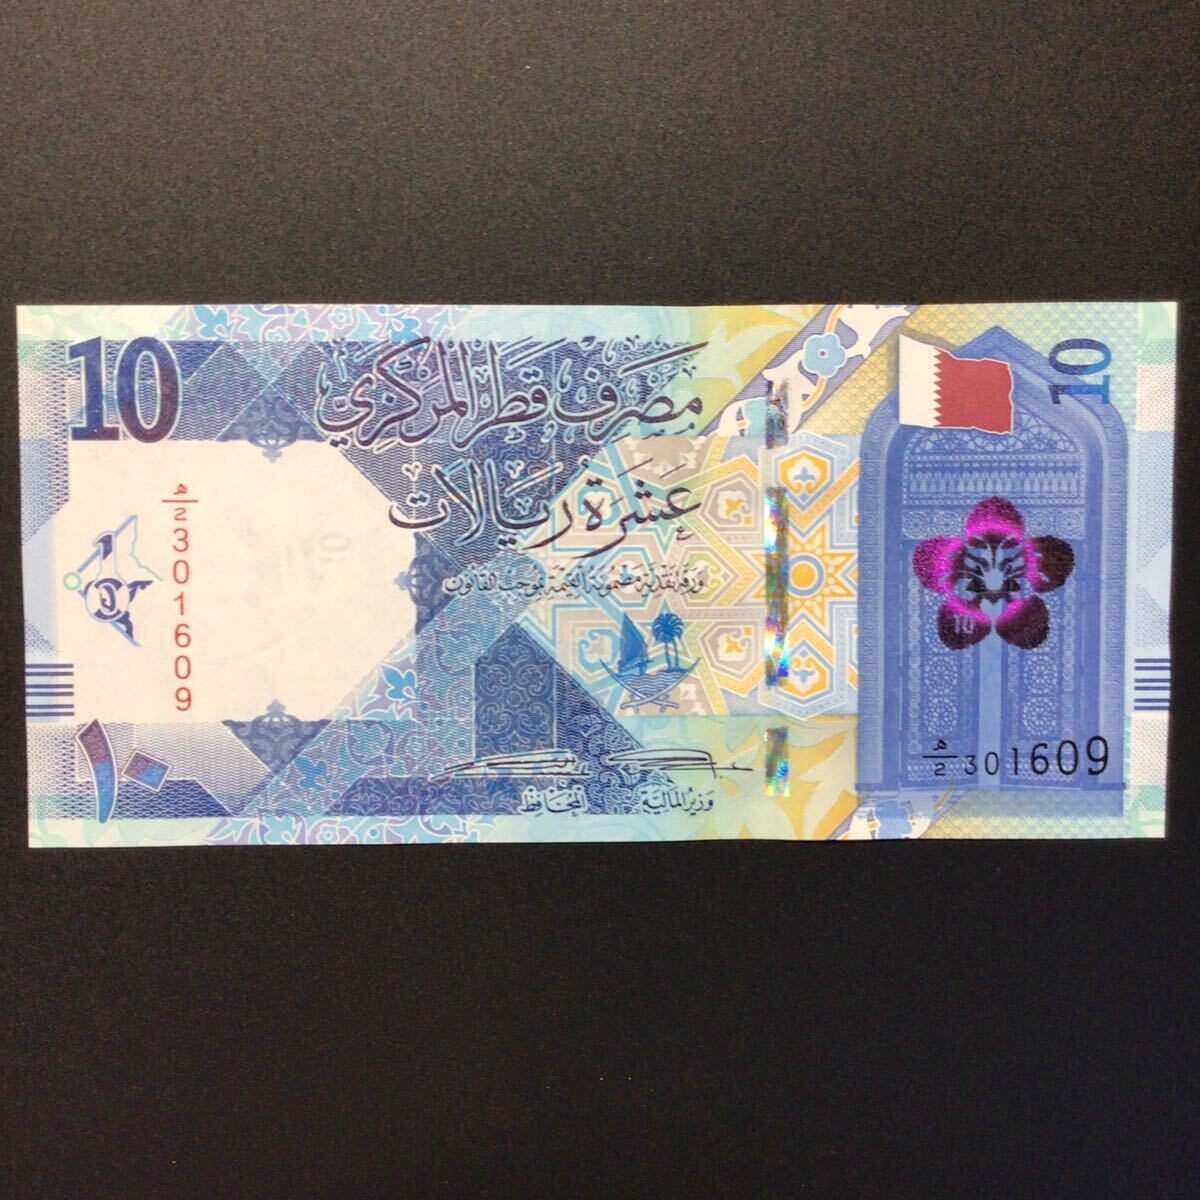 World Paper Money QATAR 10 Riyals【2020】の画像1